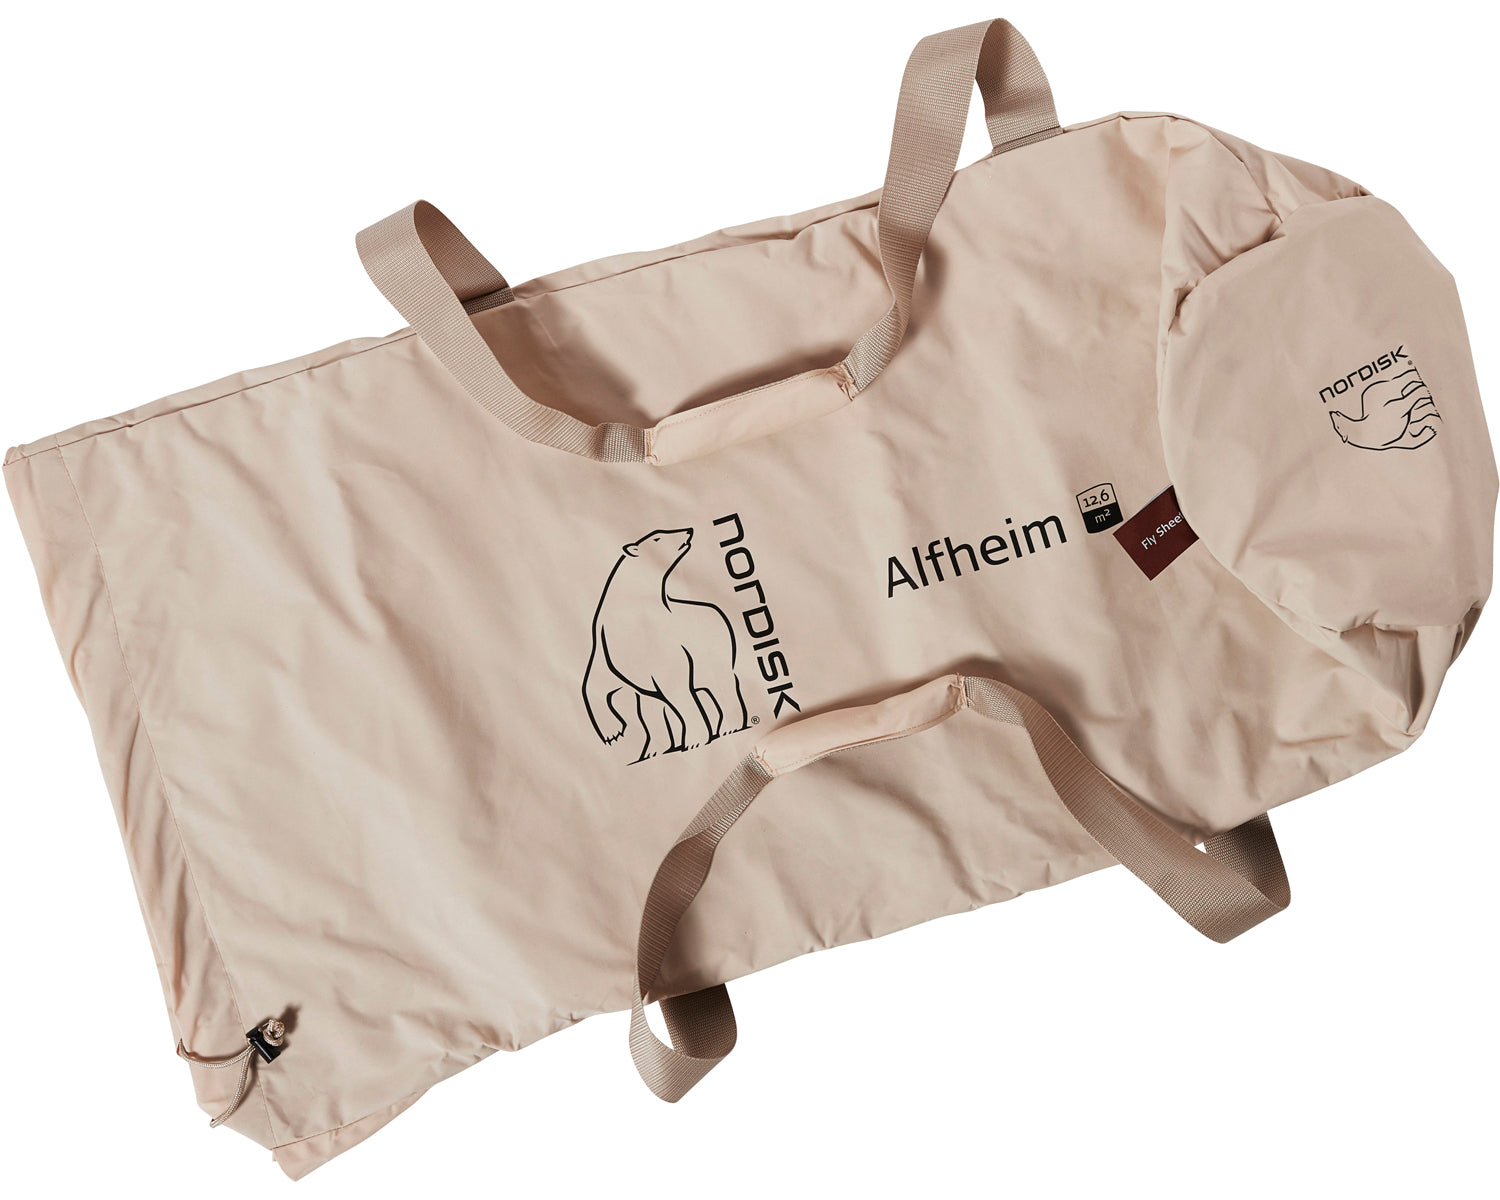 Packsack for Alfheim 12.6 - Beige